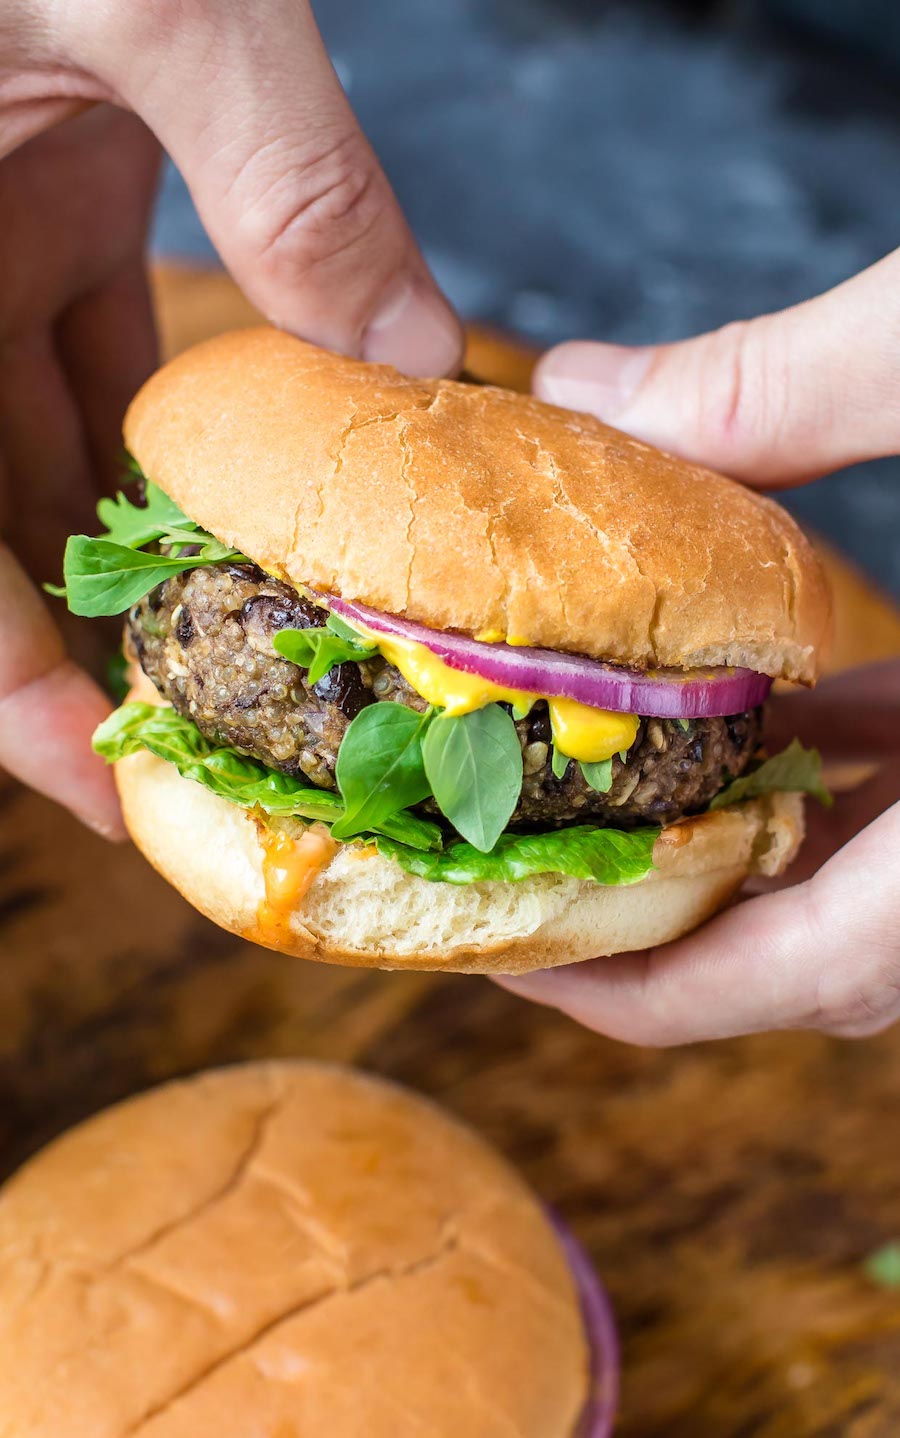 Eco-friendly burger recipes: Black Bean & Quinoa burger at Peas and Crayons